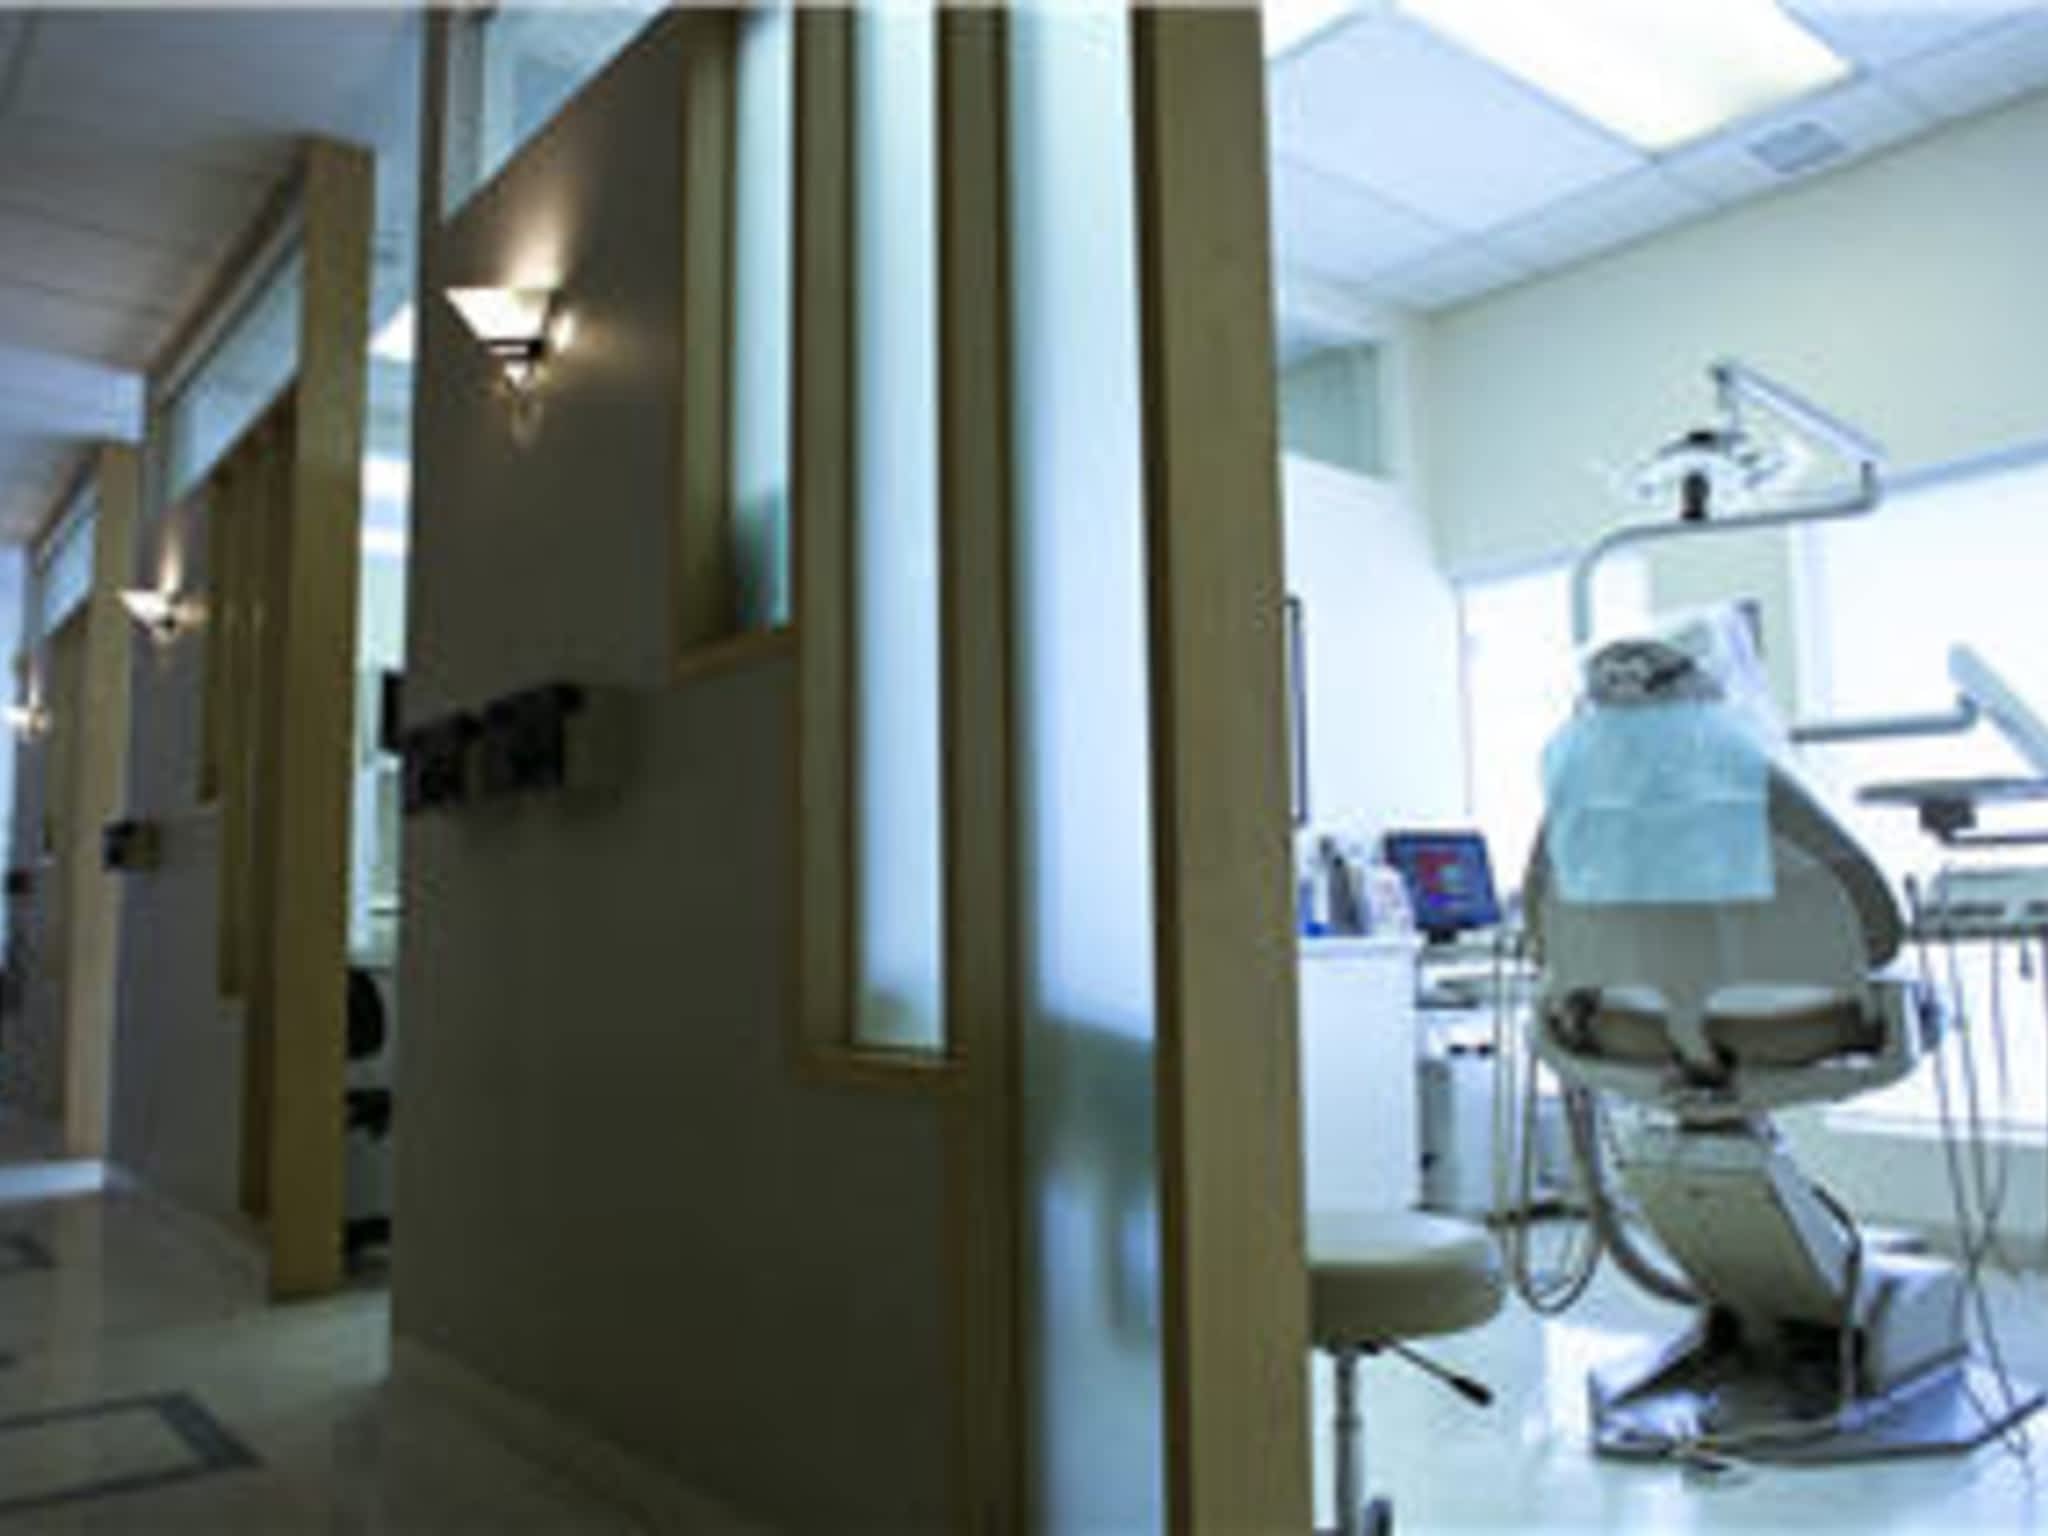 photo West 17th Avenue Dental Care